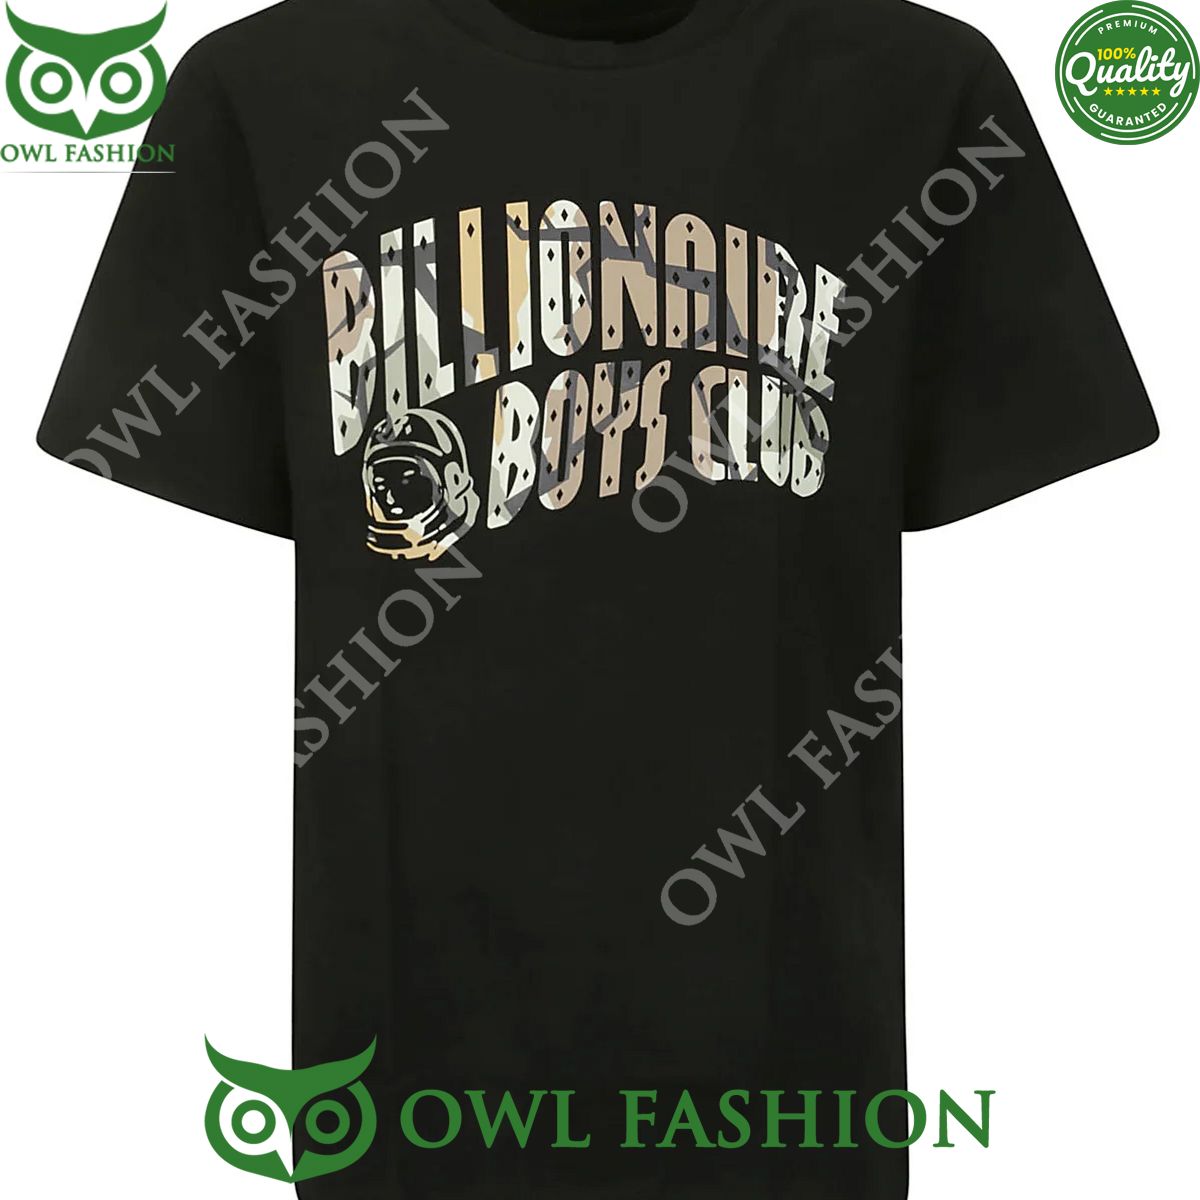 Film Billionaire Boys Club 1980s t shirt Nice photo dude